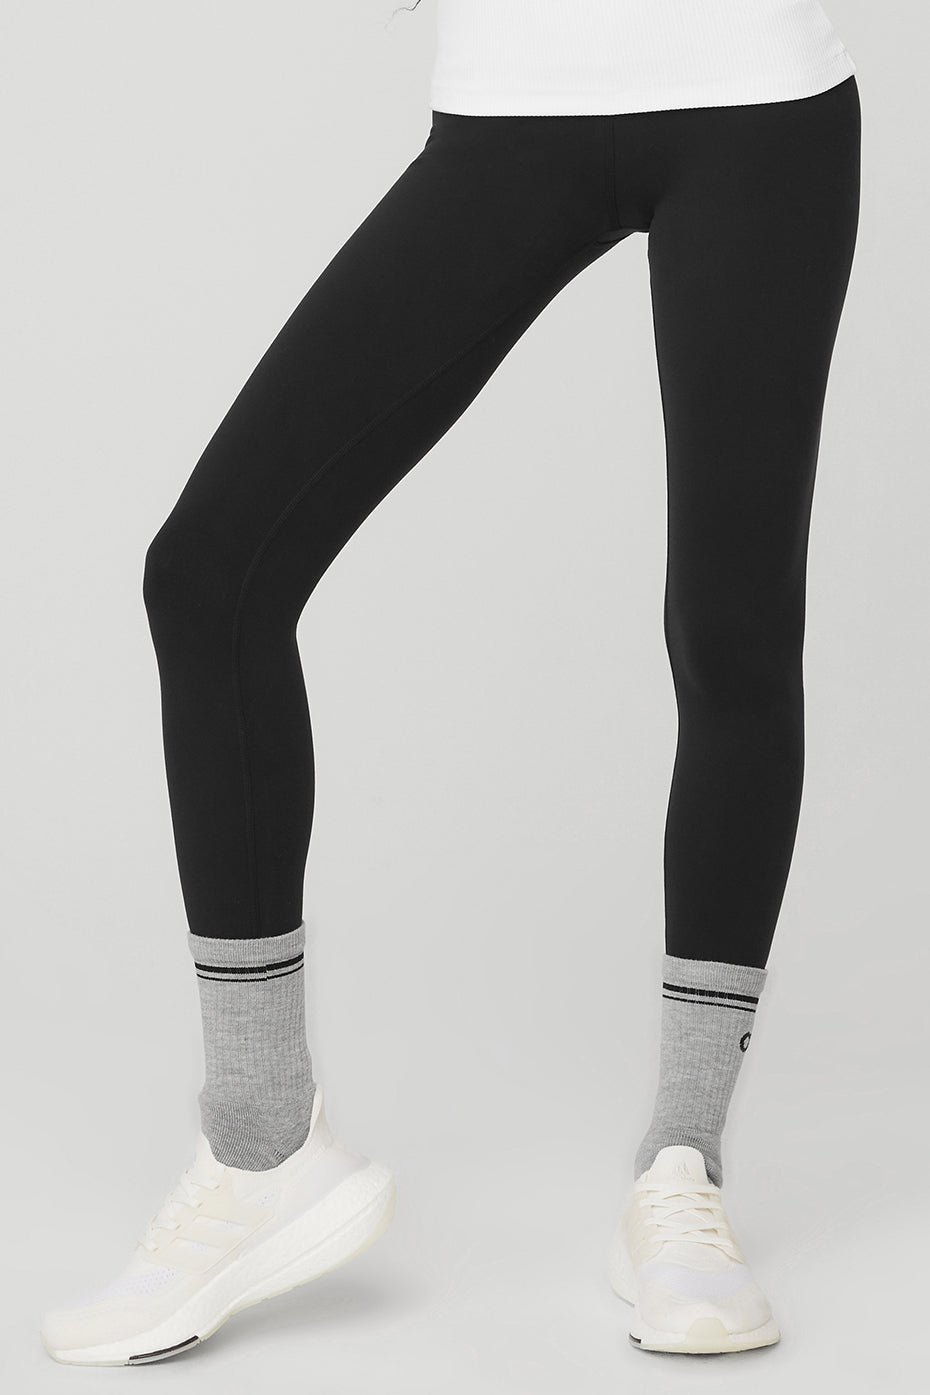 Alo Yoga S/M Women's Throwback Sock - Athletic Grey/Black